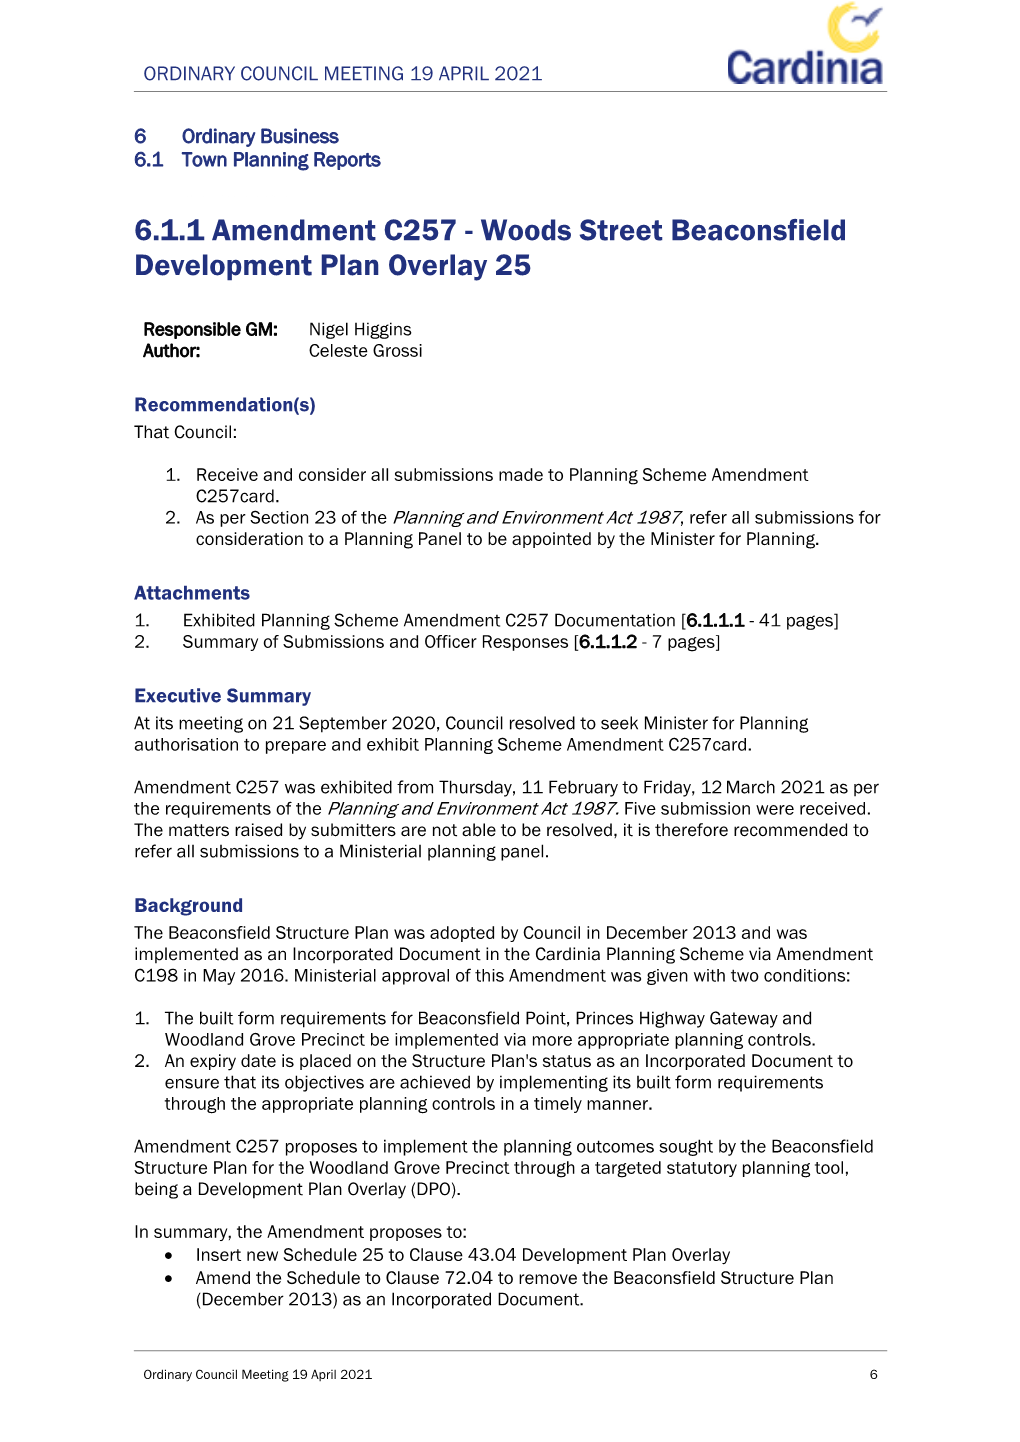 Woods Street Beaconsfield Development Plan Overlay 25 6.1.1 Amendment C257 - Woods Street Beaconsfield Development Plan Overlay 25